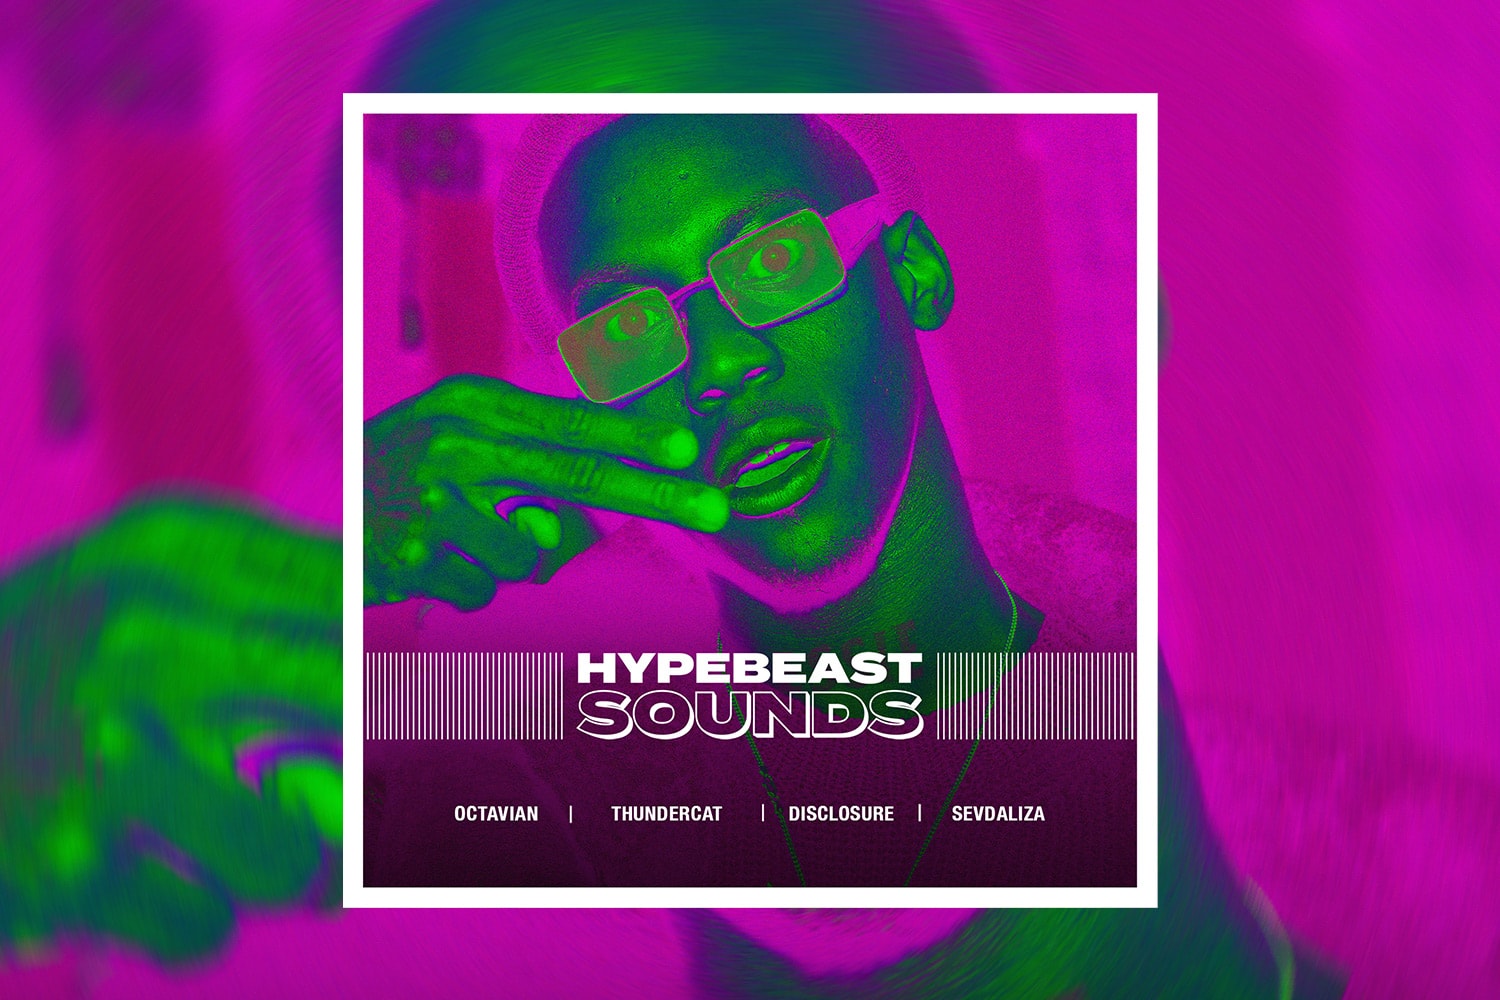 HYPEBEAST Sounds Playlist Spotify Octavian Thundercat Disclosure Sevdaliza Best New Tracks Albums Stream Listen Discover